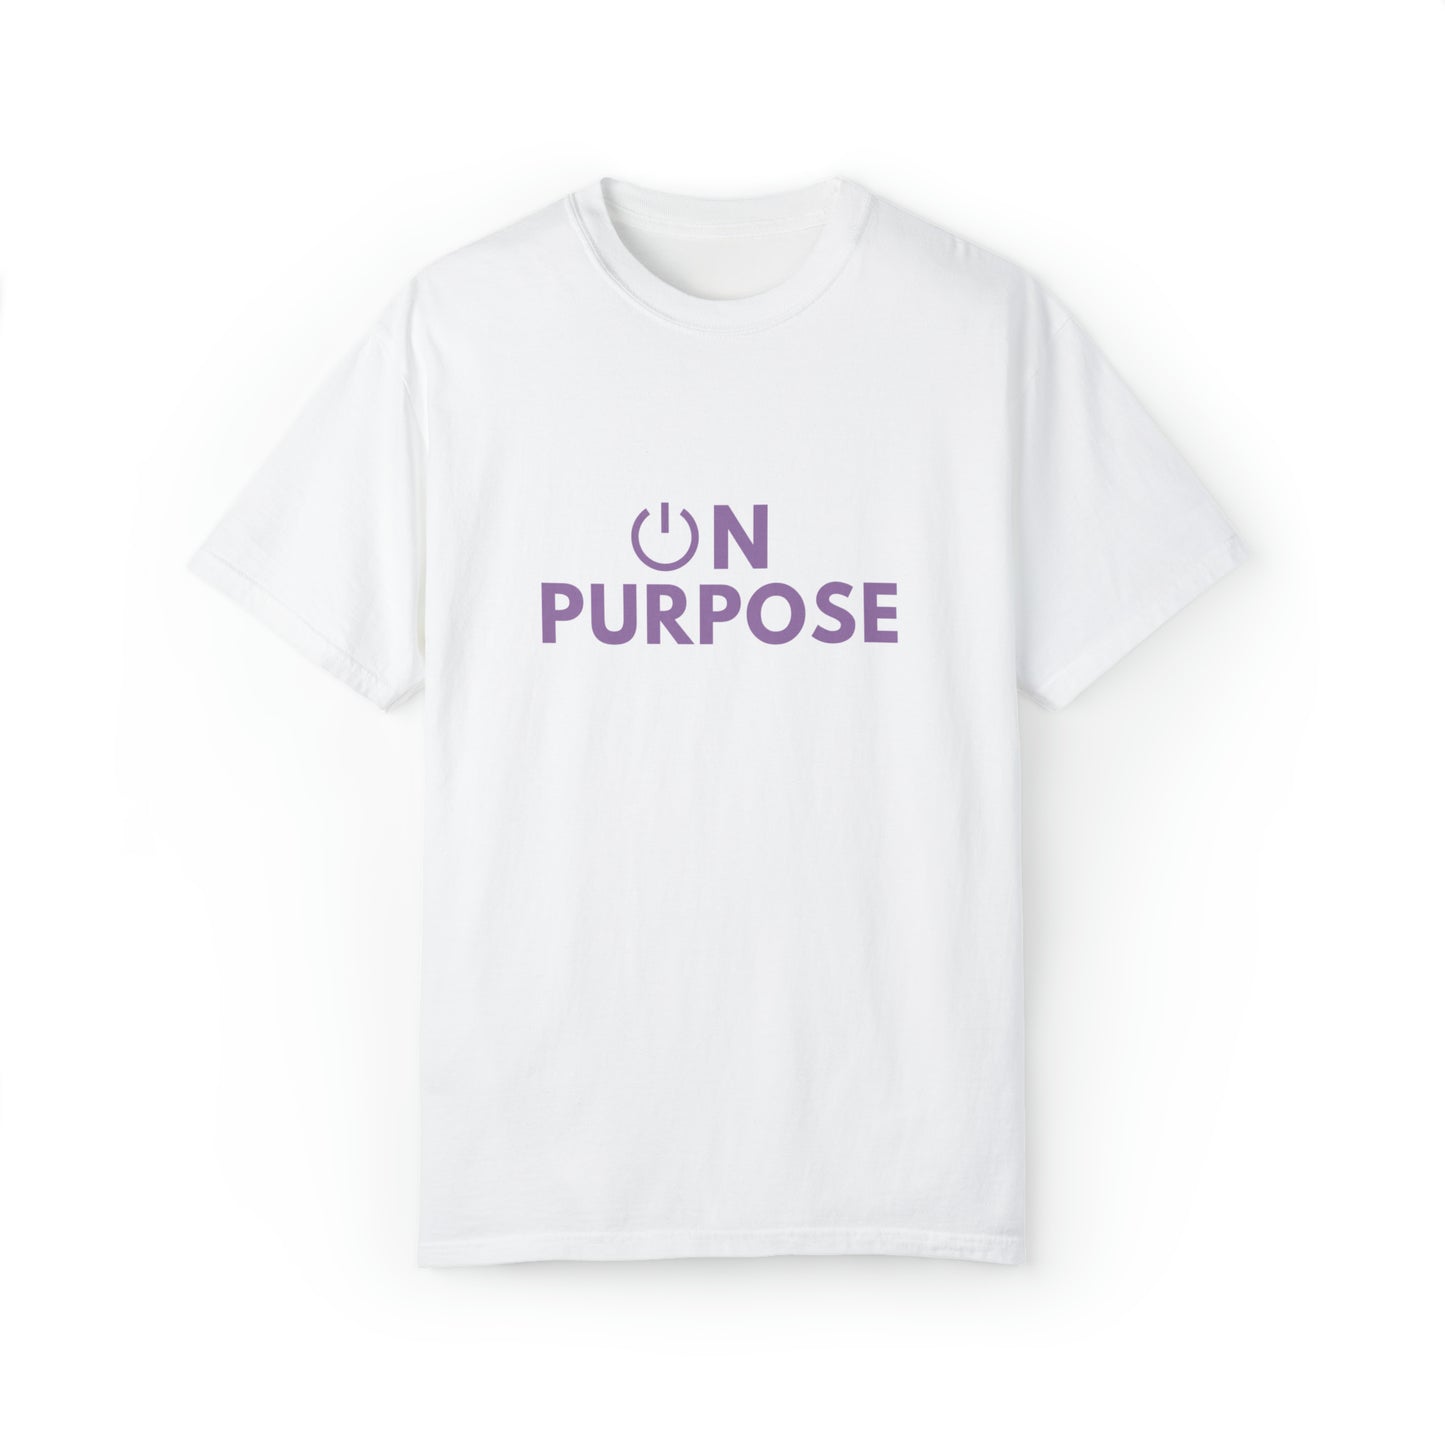 On Purpose Unisex T-shirt